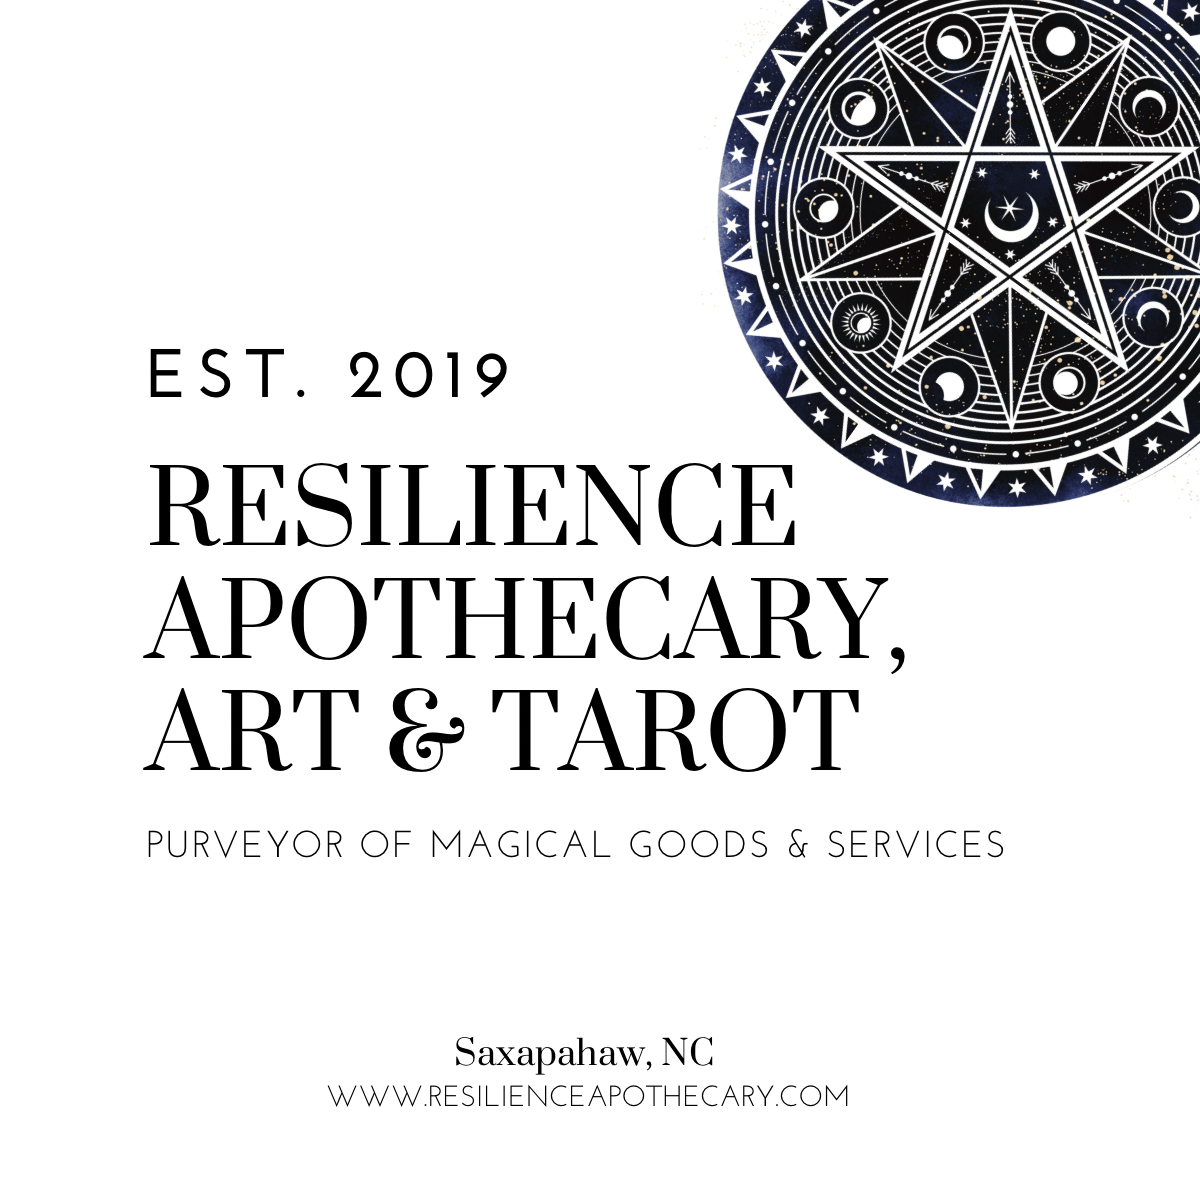 RESILIENCE APOTHECARY, ART & TAROT's account image